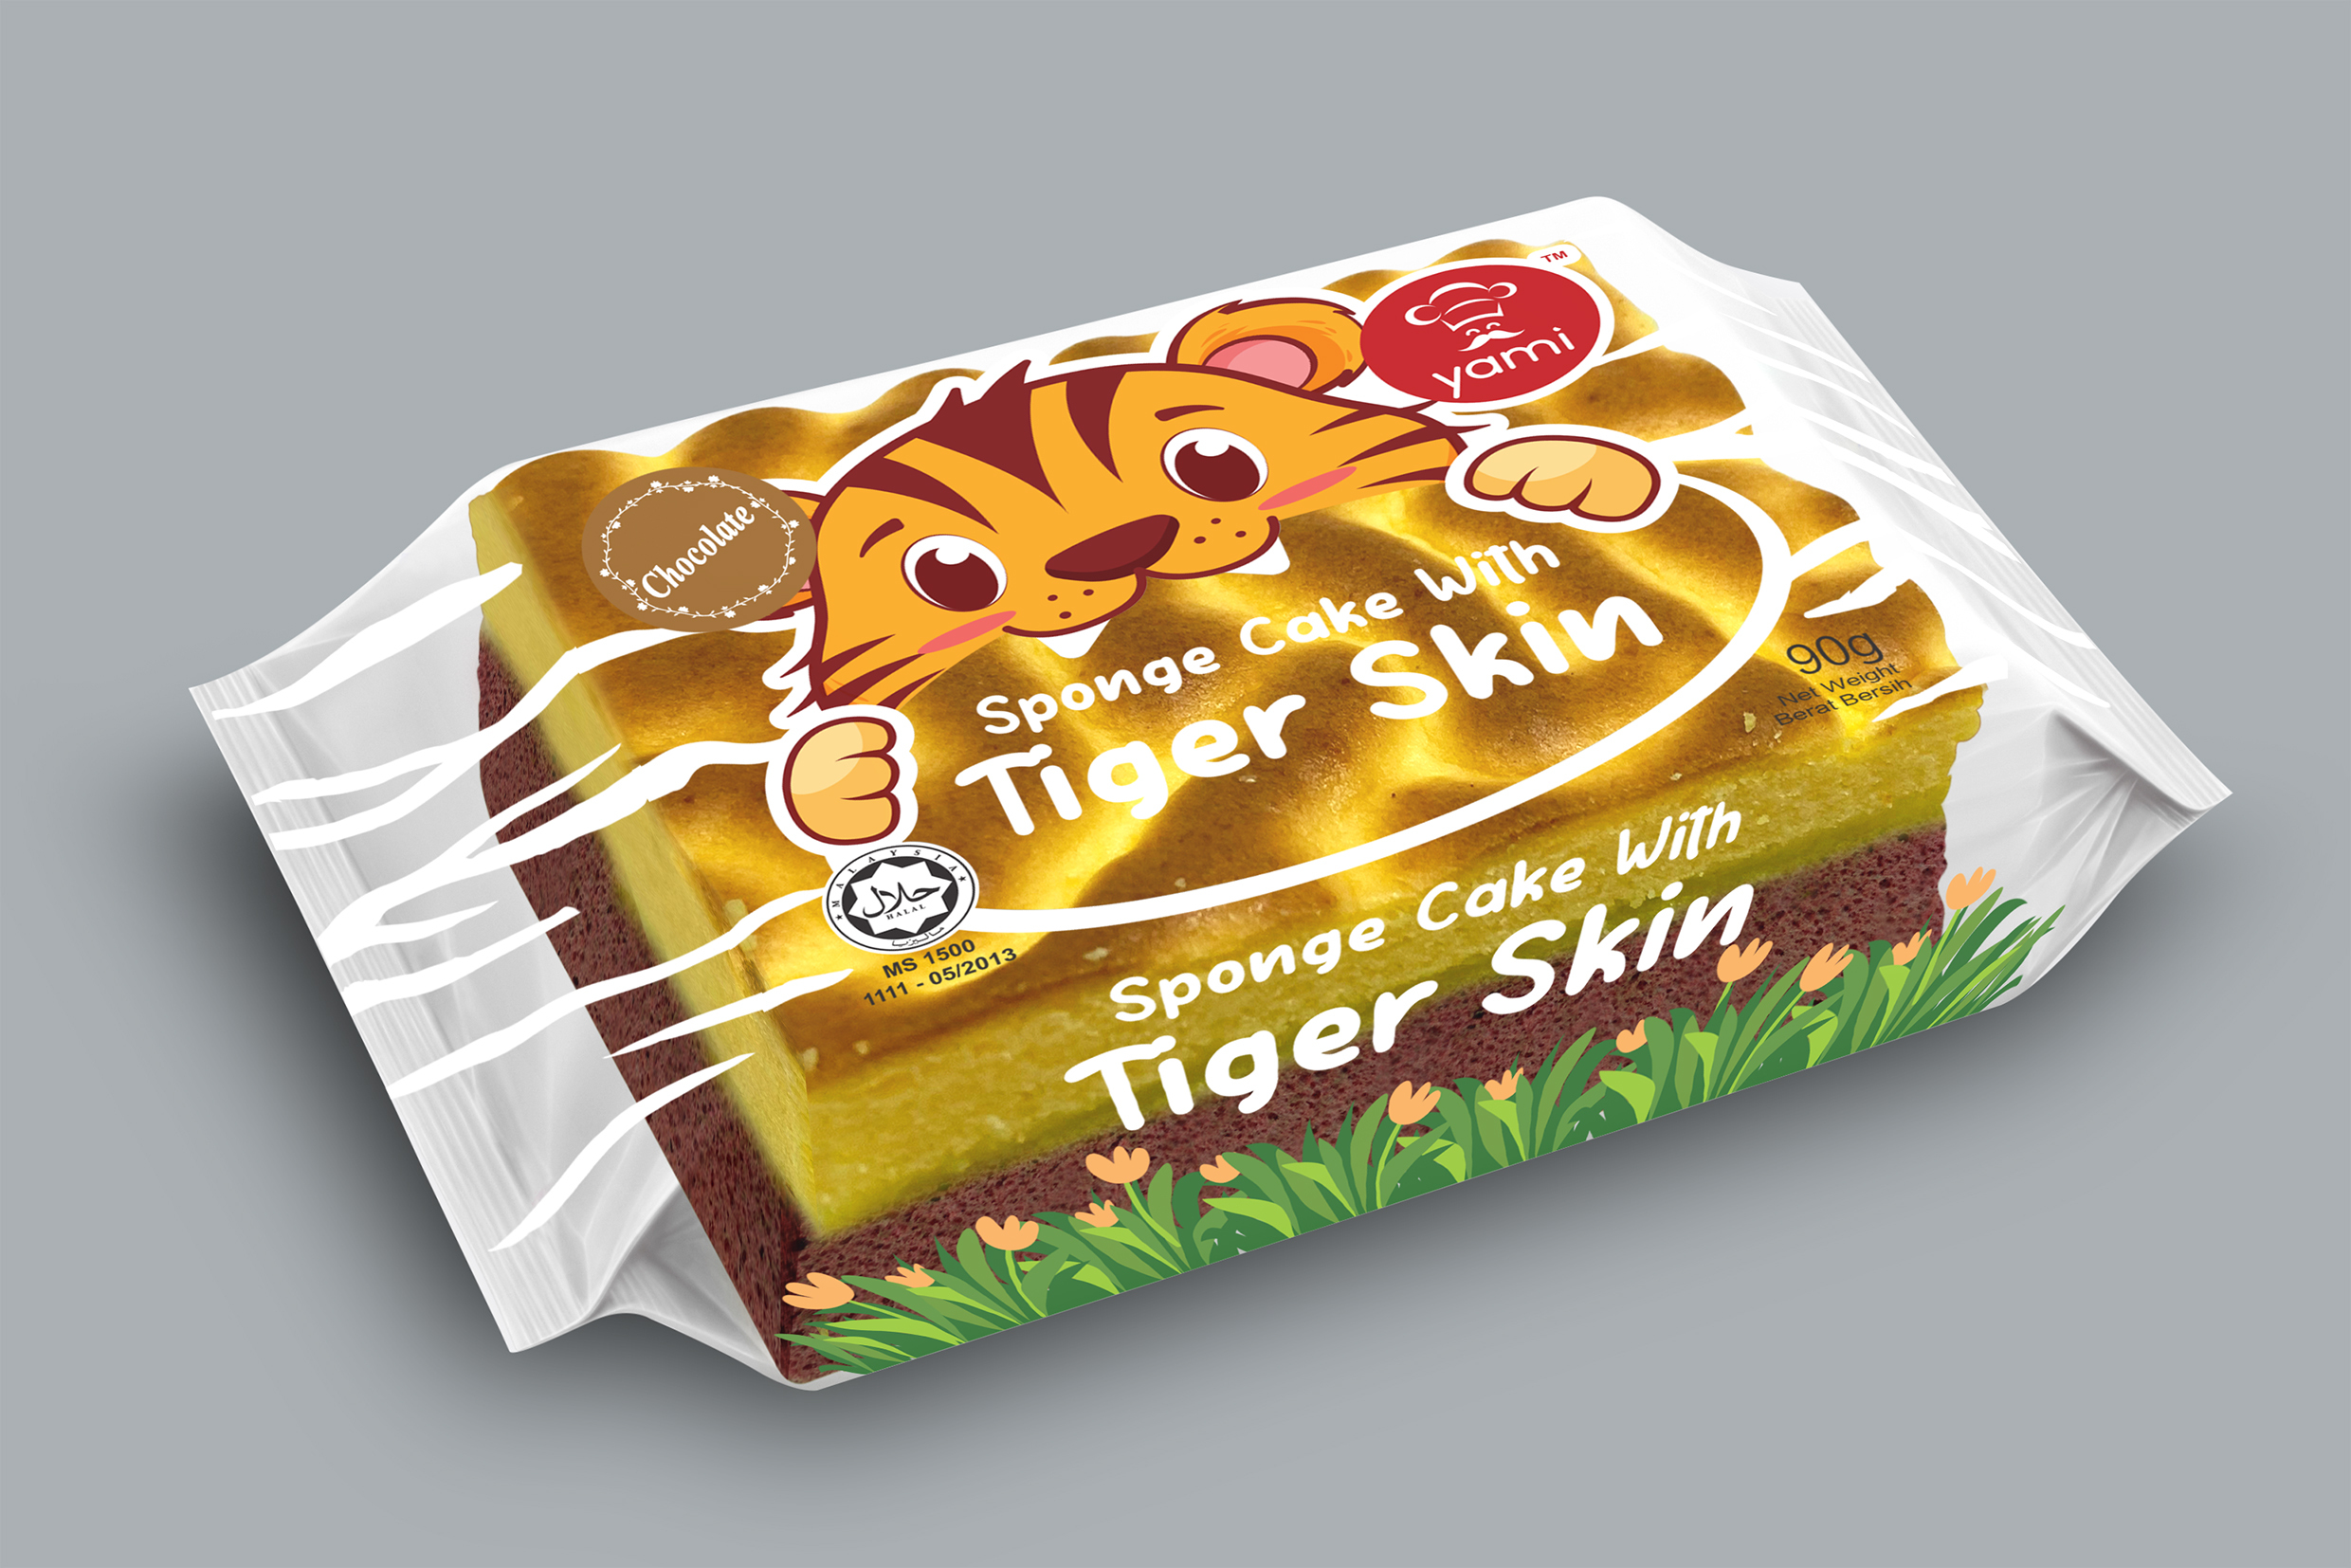 Tiger sponge cake chocolate